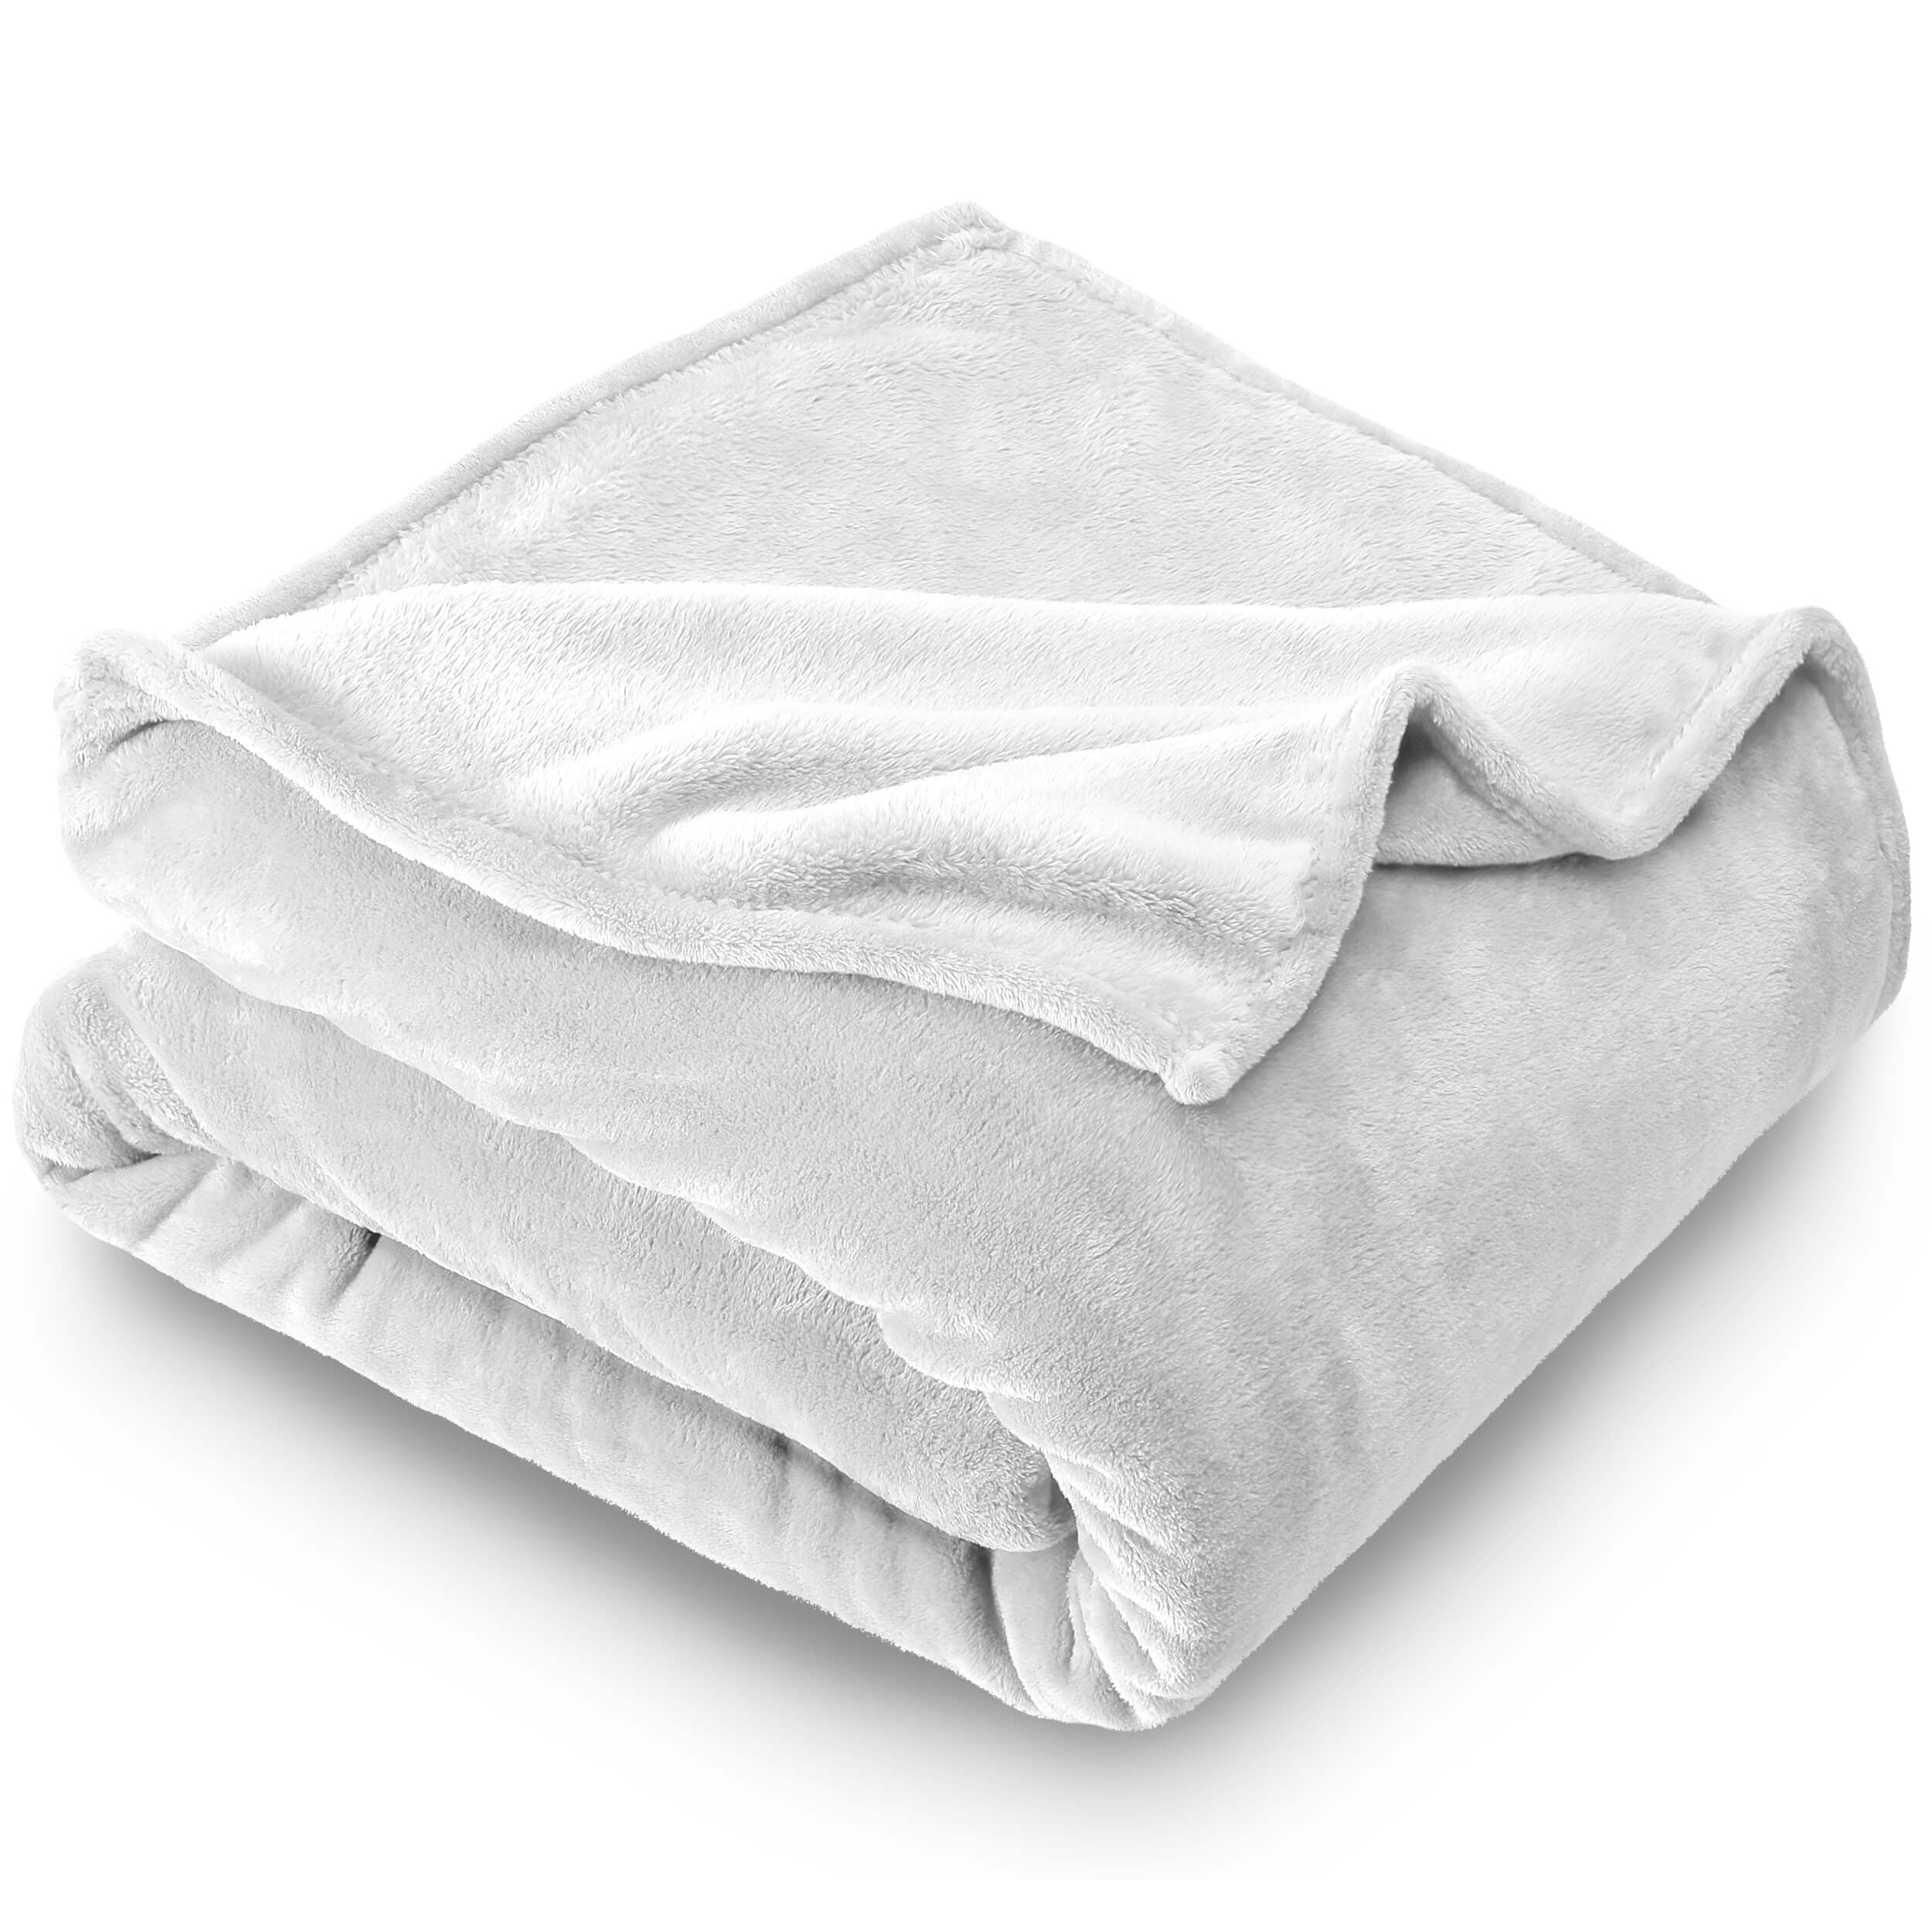 Bare Home Microplush Fleece Blanket Twin/Twin XL, Light Pink Ultra-Soft Twin/Twin Extra Long Blanket Cozy Lightweight Soft Blanket Luxurious Fuzzy Warm Blanket 